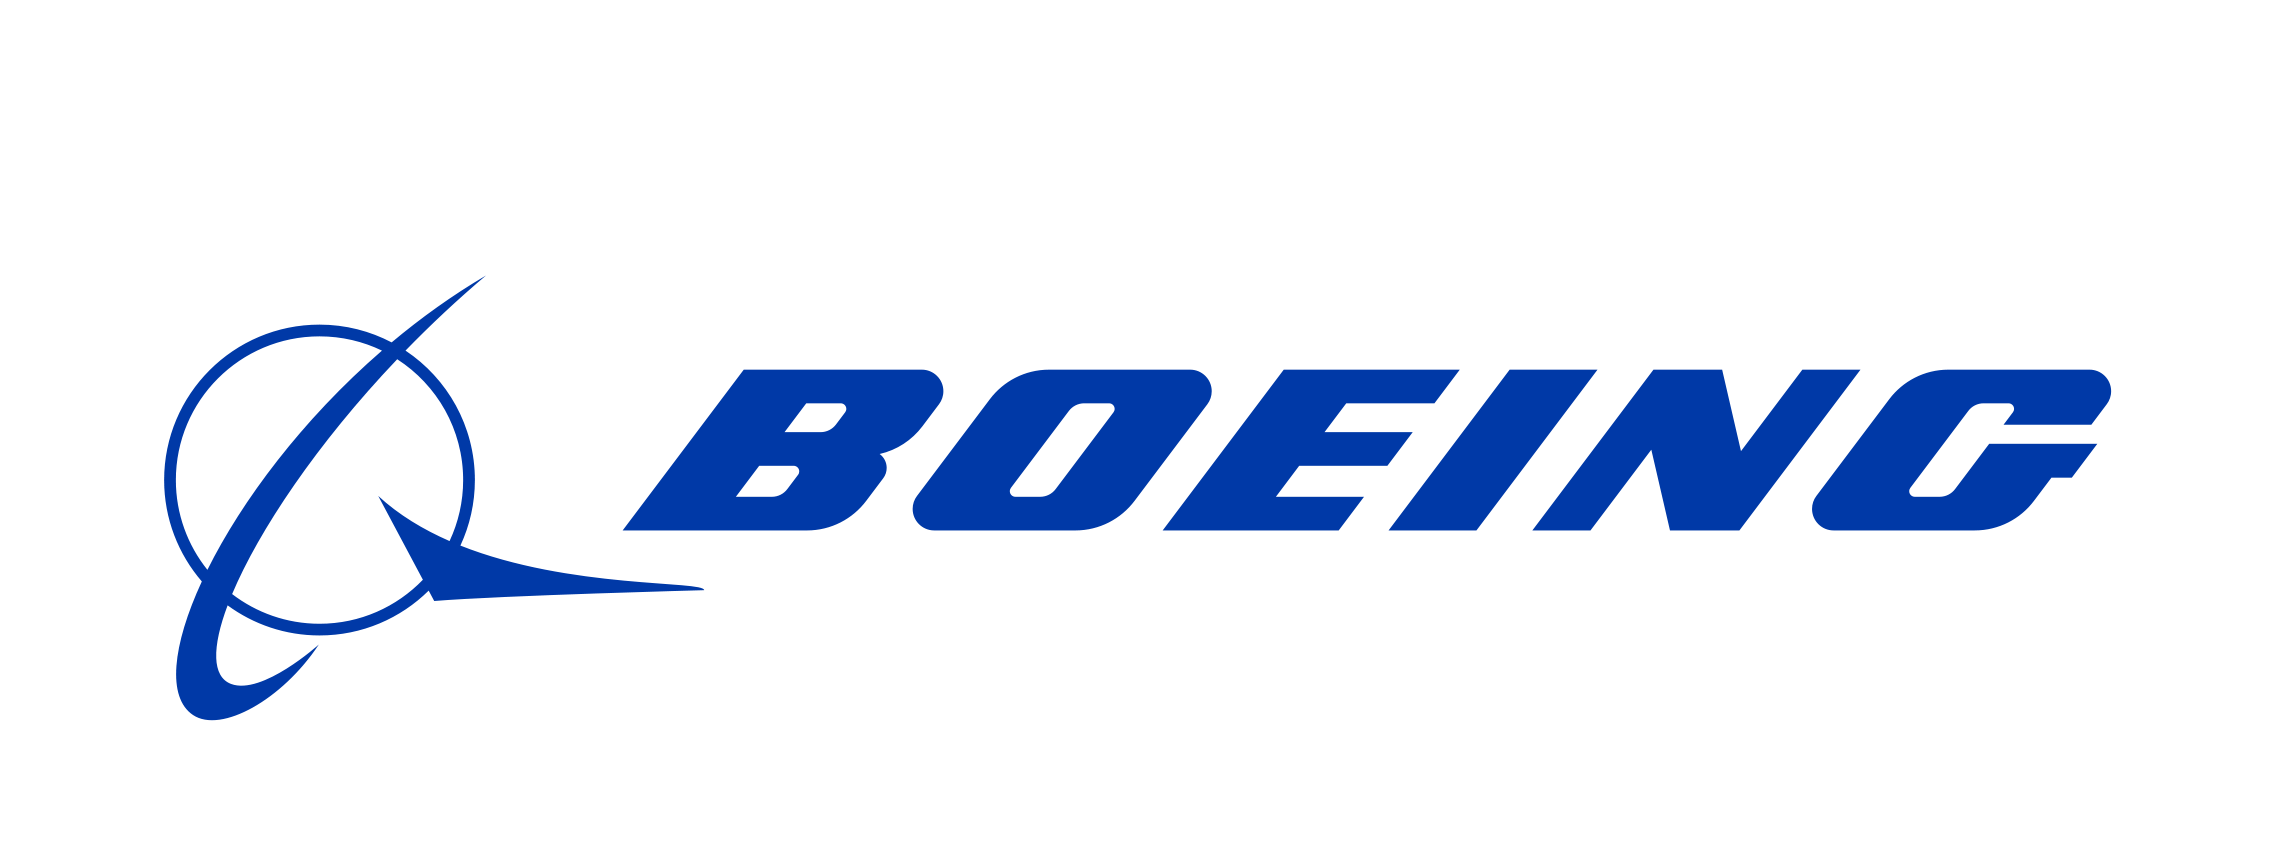 CDG Boeing Logo - Boeing: Boeing India